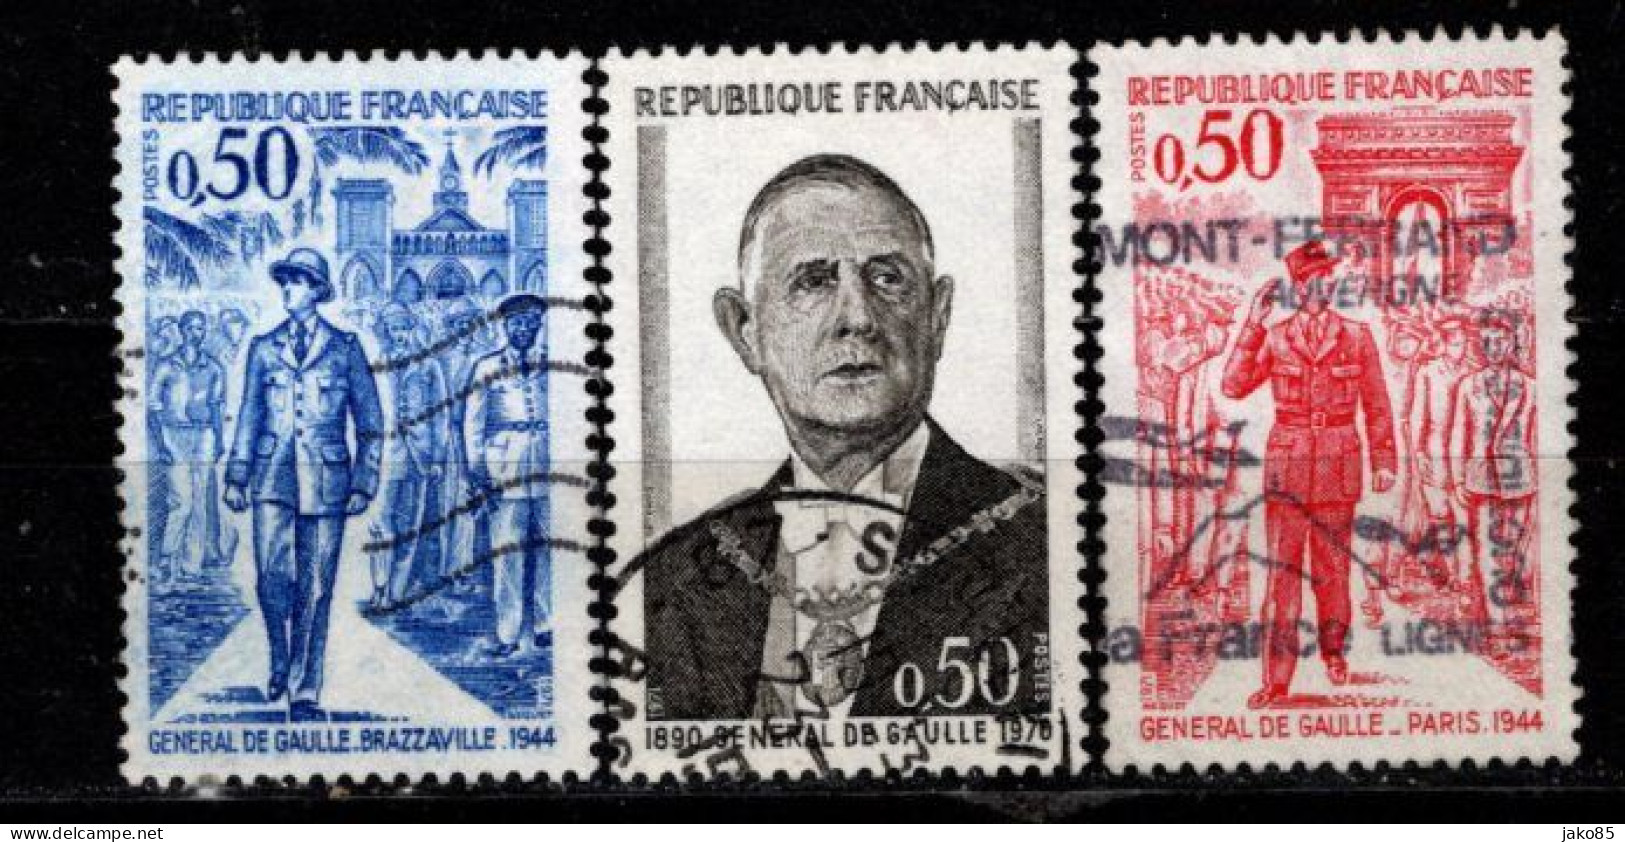 - FRANCE - 1971 - YT N° 1696 / 1698 - Oblitérés - Général De Gaulle - Used Stamps